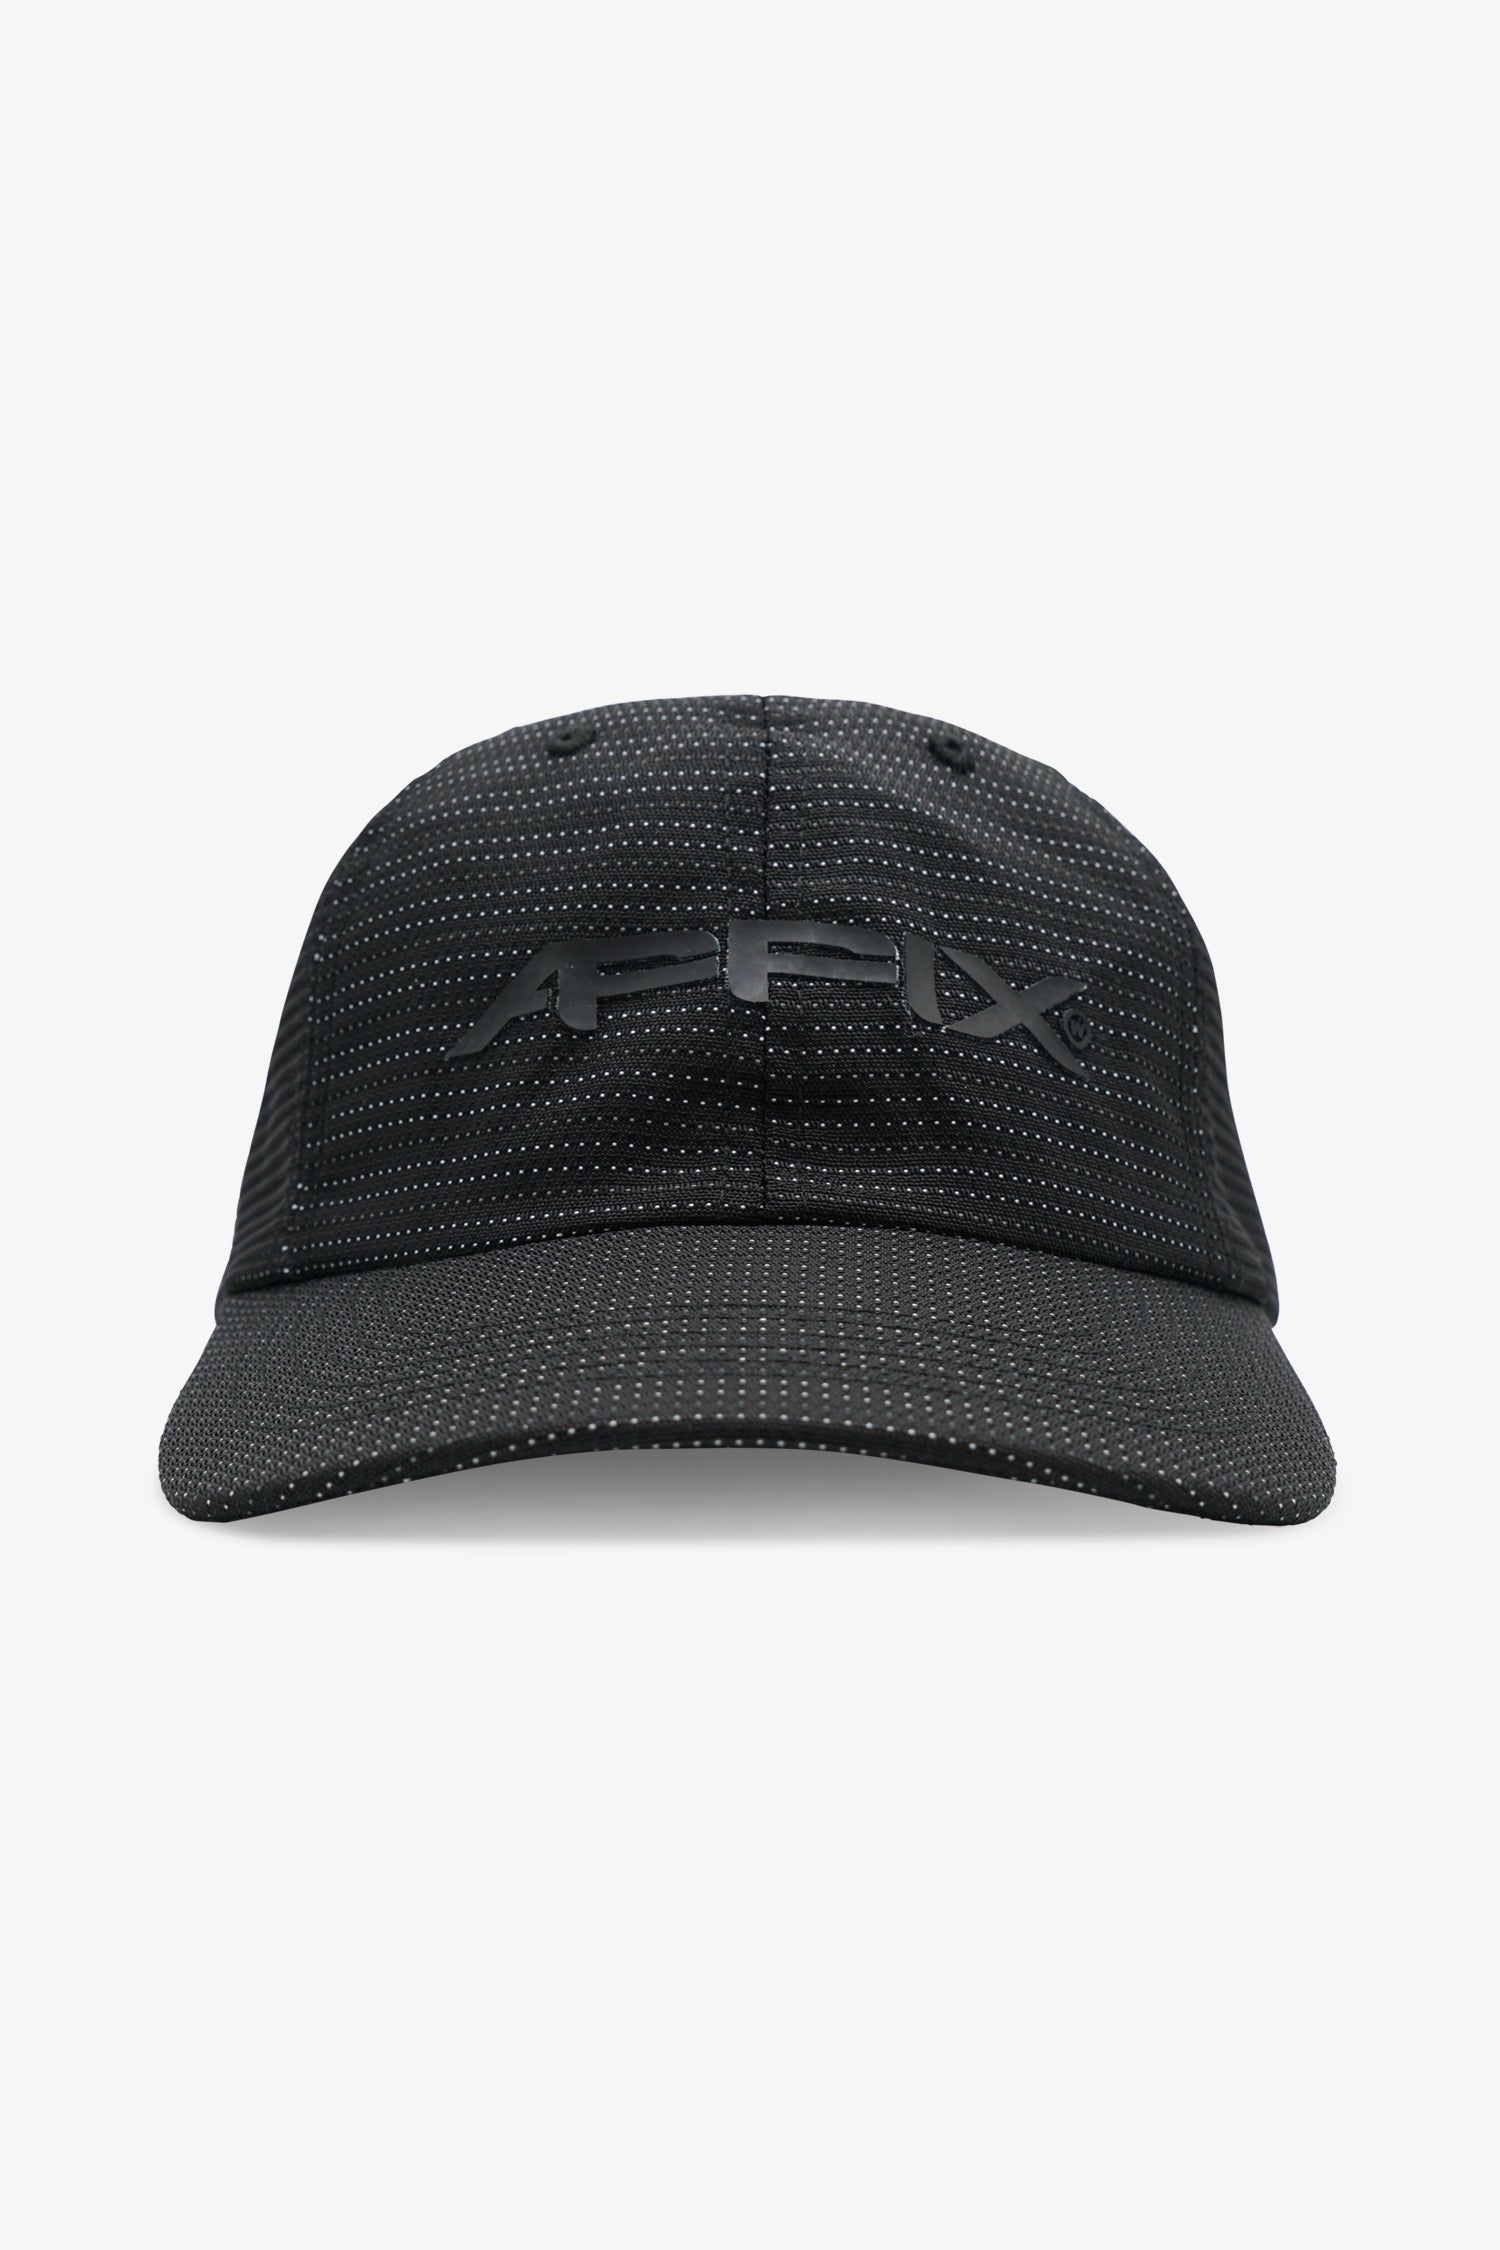 Selectshop FRAME - AFFIX Visibility Cap Headwear Dubai